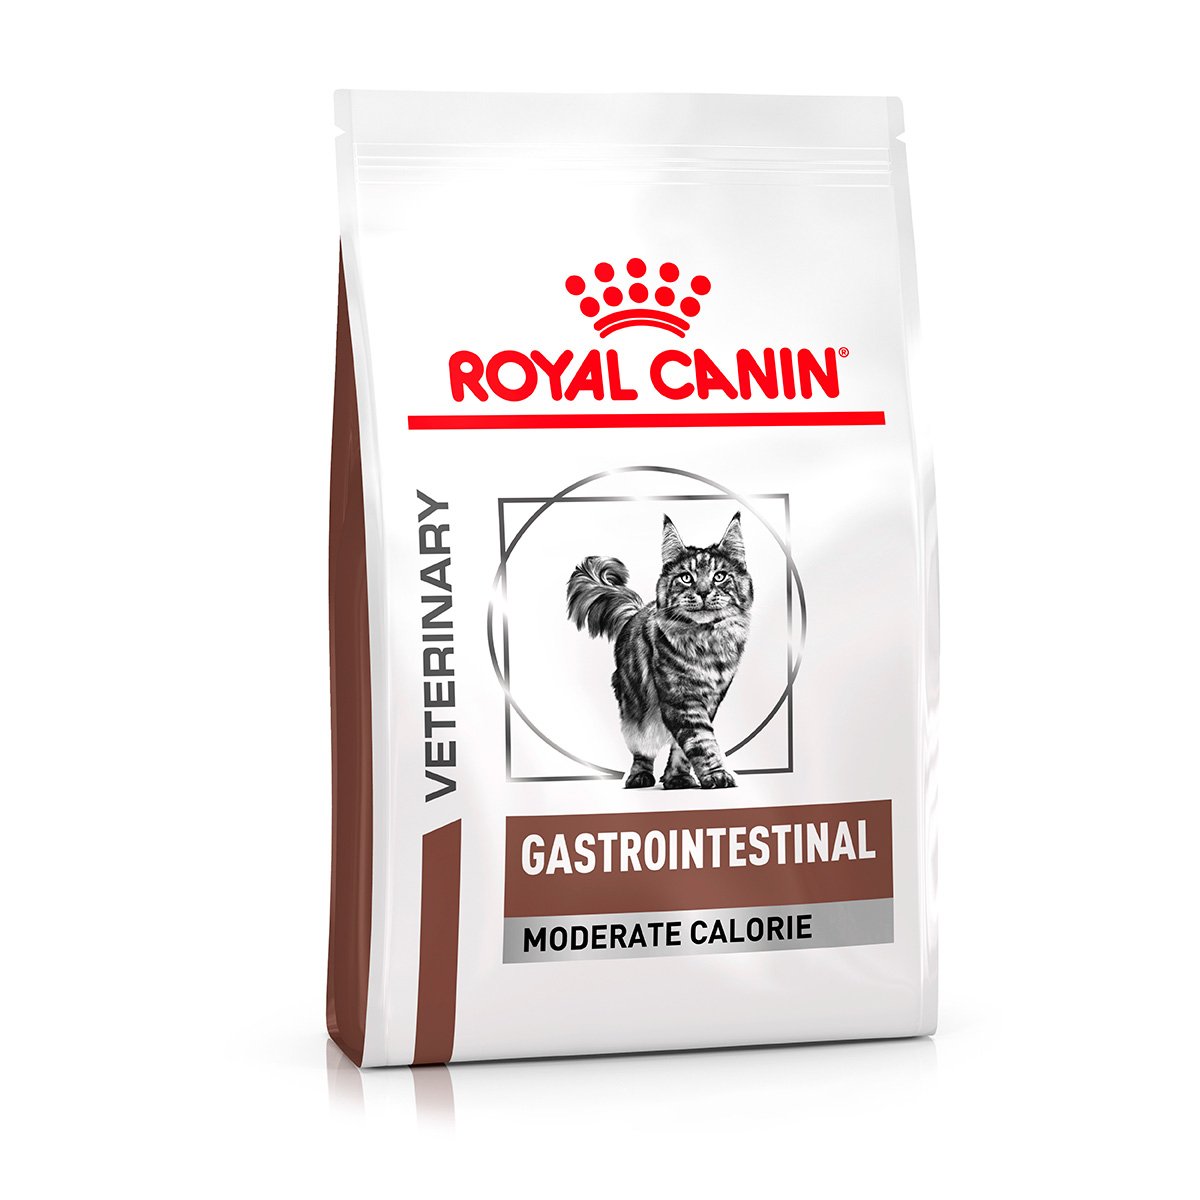 ROYAL CANIN® Veterinary GASTROINTESTINAL MODERATE CALORIE Trockenfutter für Katzen 4kg von Royal Canin